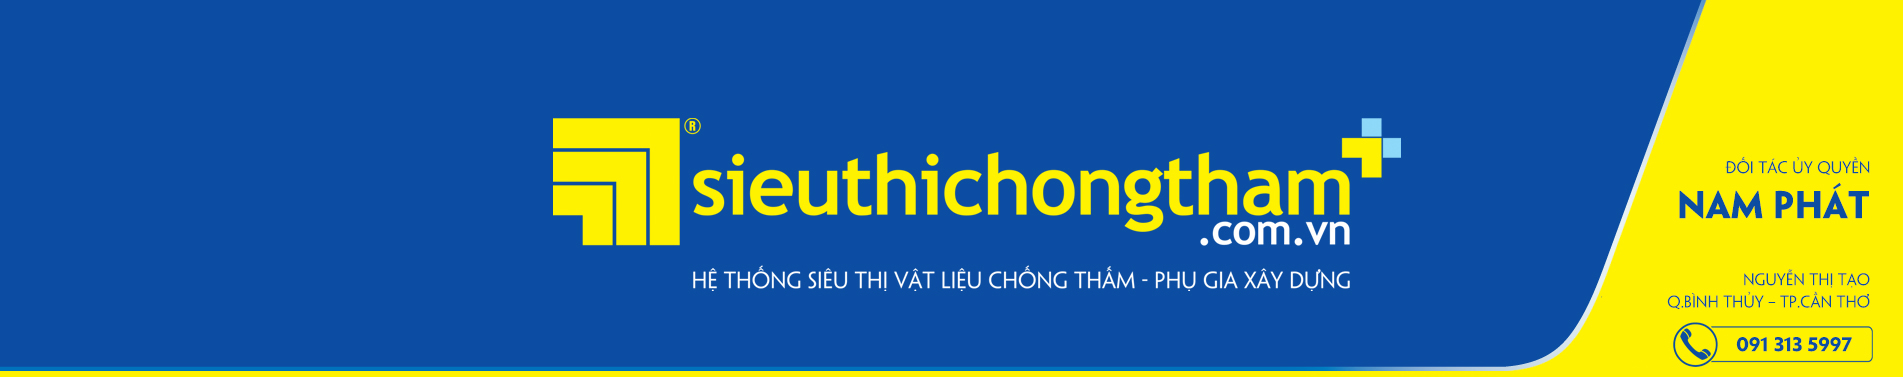 Nam Phat Banner 1